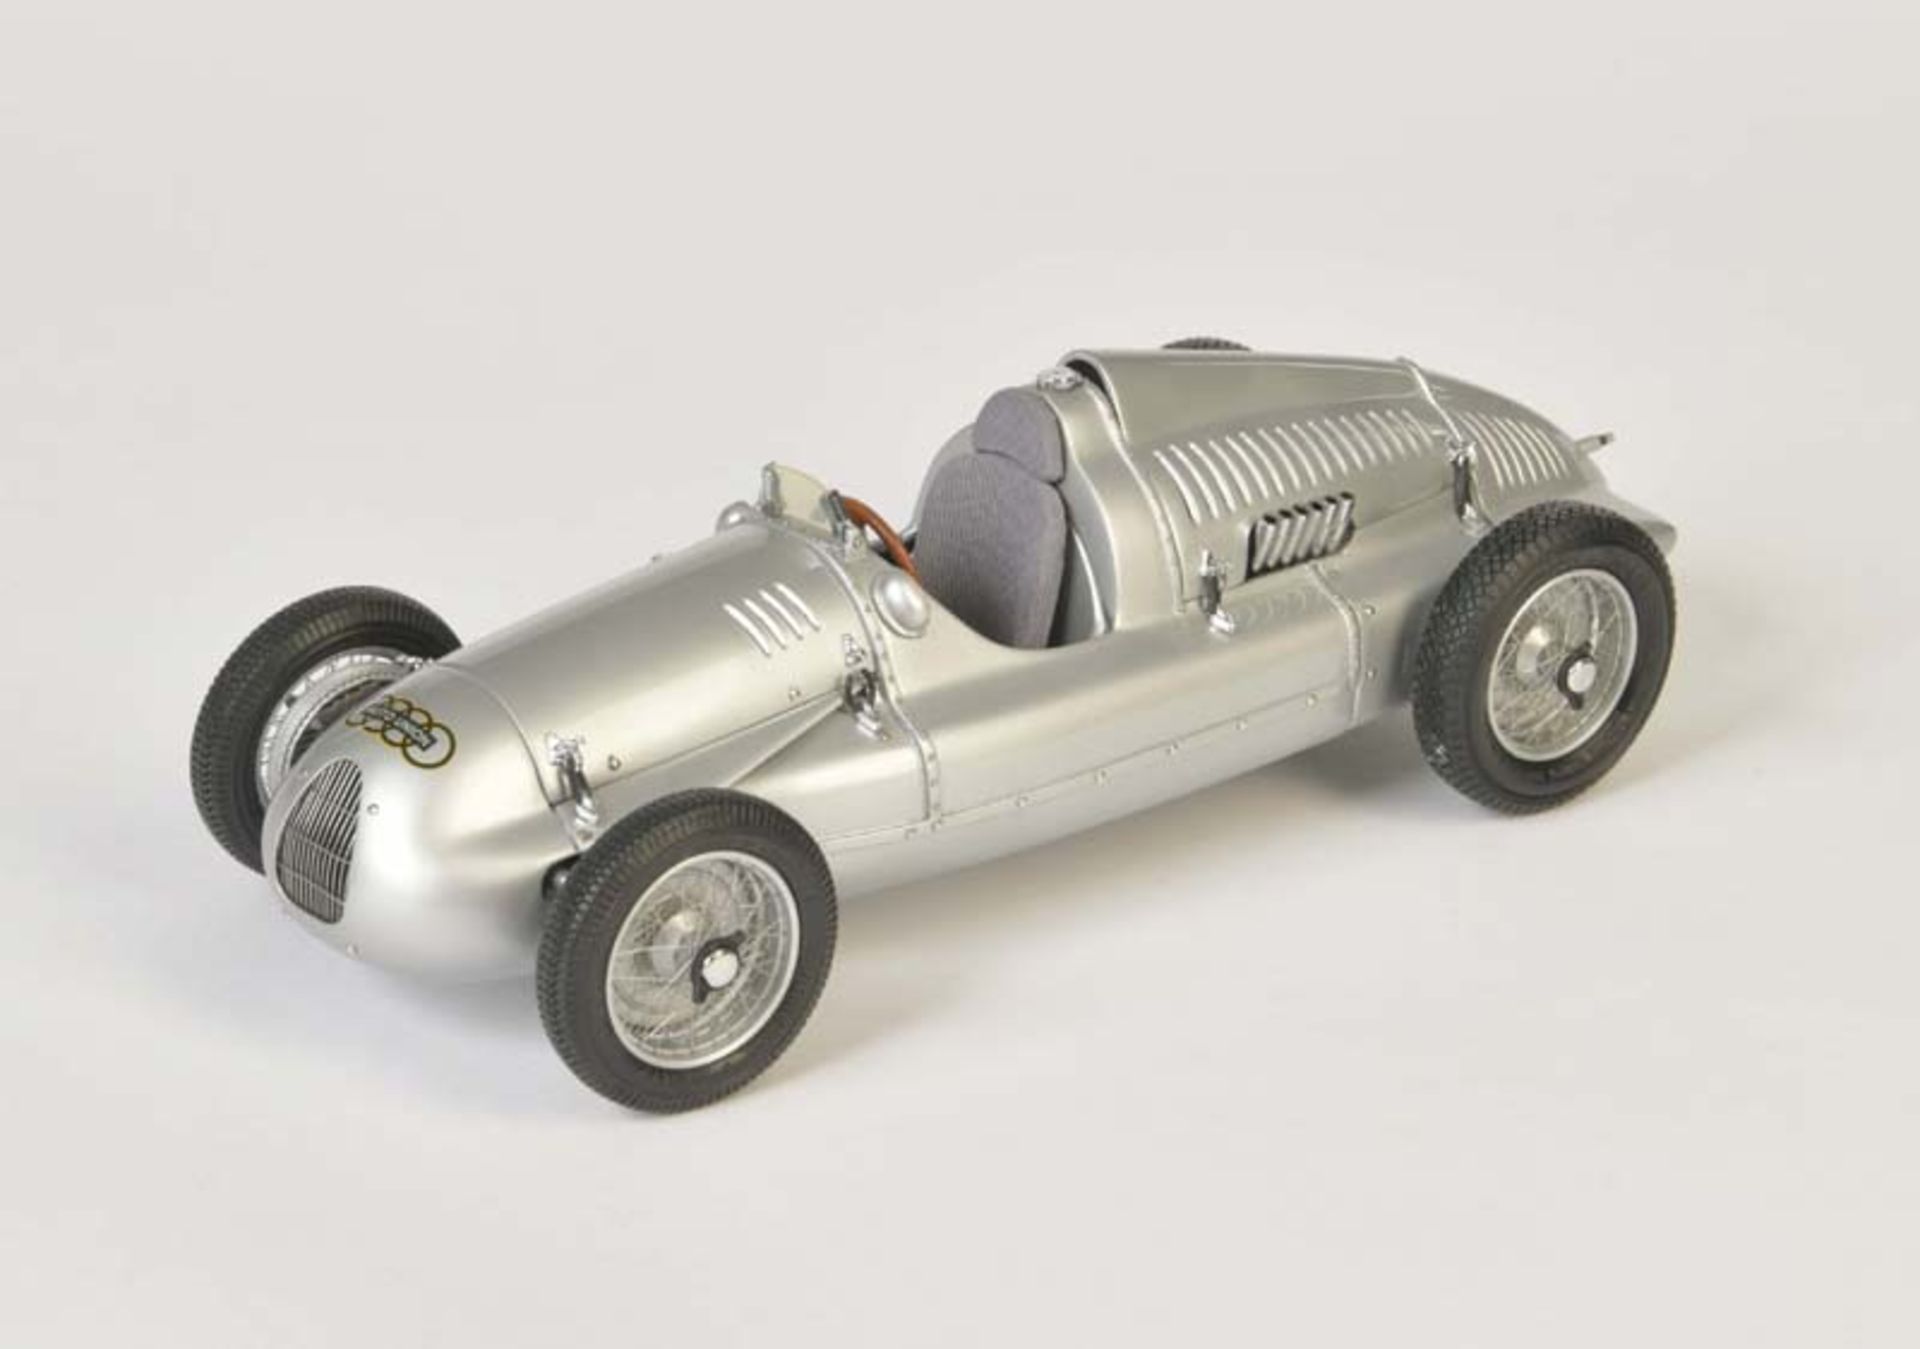 CMC, Auto Union Typ D 1938, 1:18, box C 1-, 1 belt loose, otherwise C 1